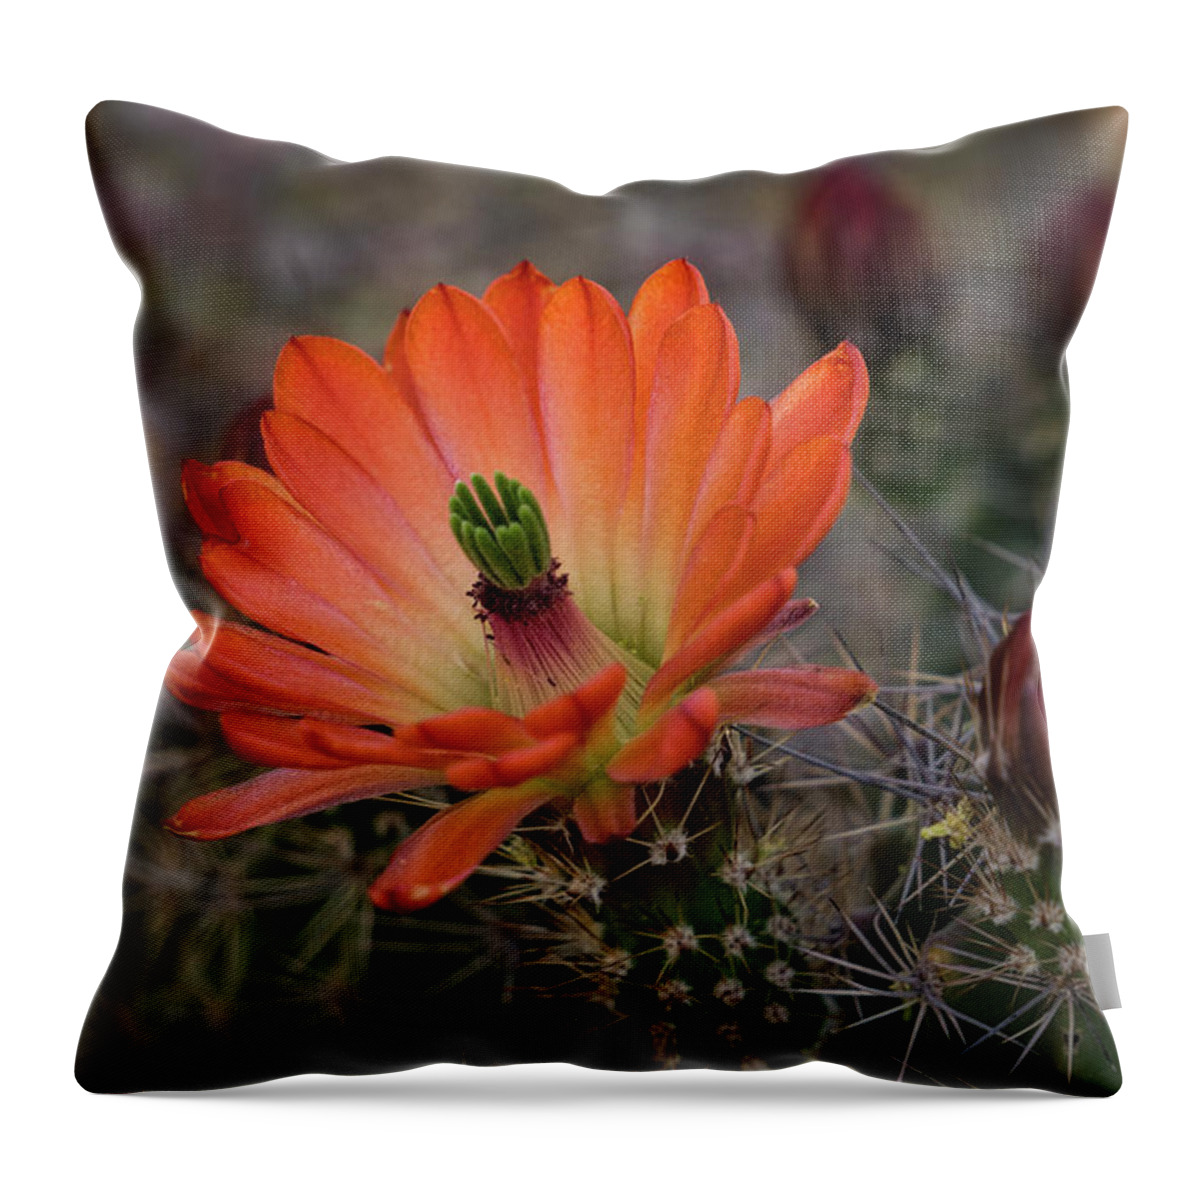 Arizona Throw Pillow featuring the photograph An Orange Beauty of a Hedgehog by Saija Lehtonen